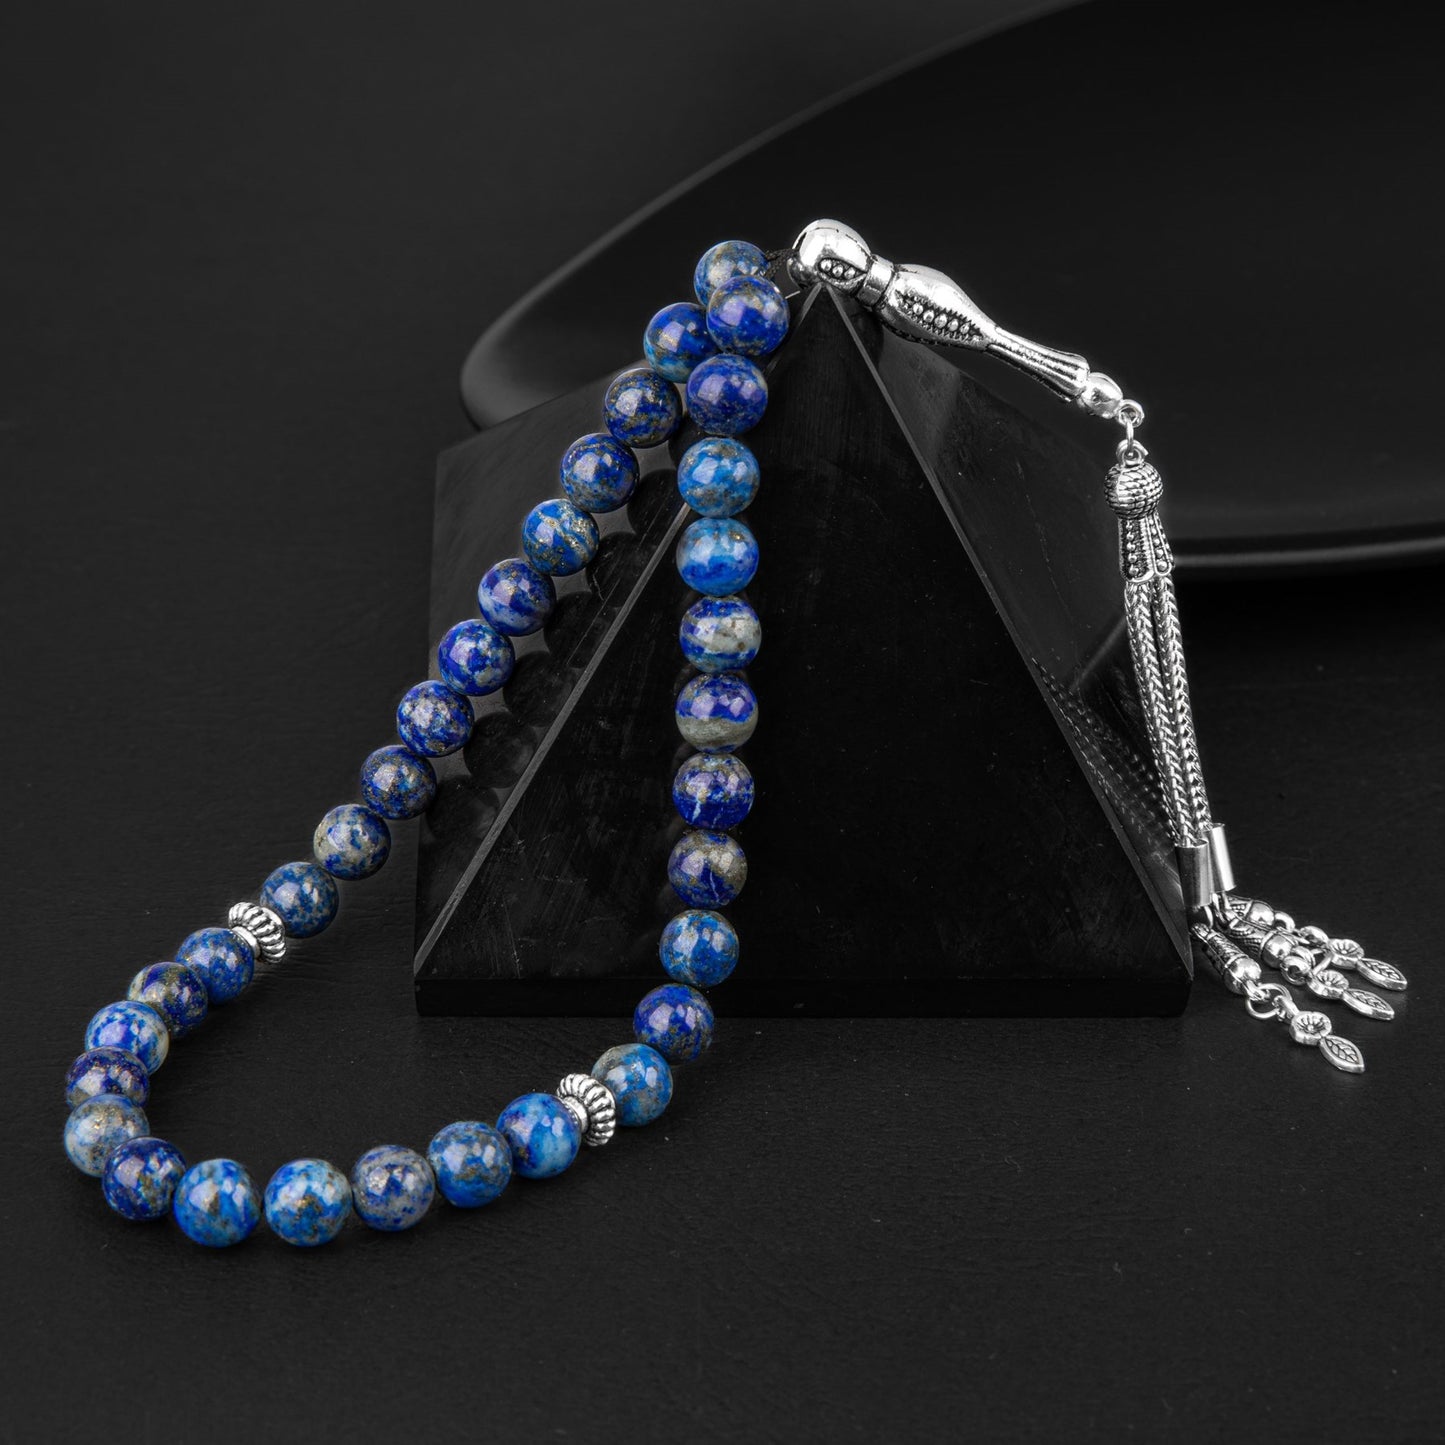 Lapis Lazuli Gemstone Prayer Beads - 8mm / 33pc